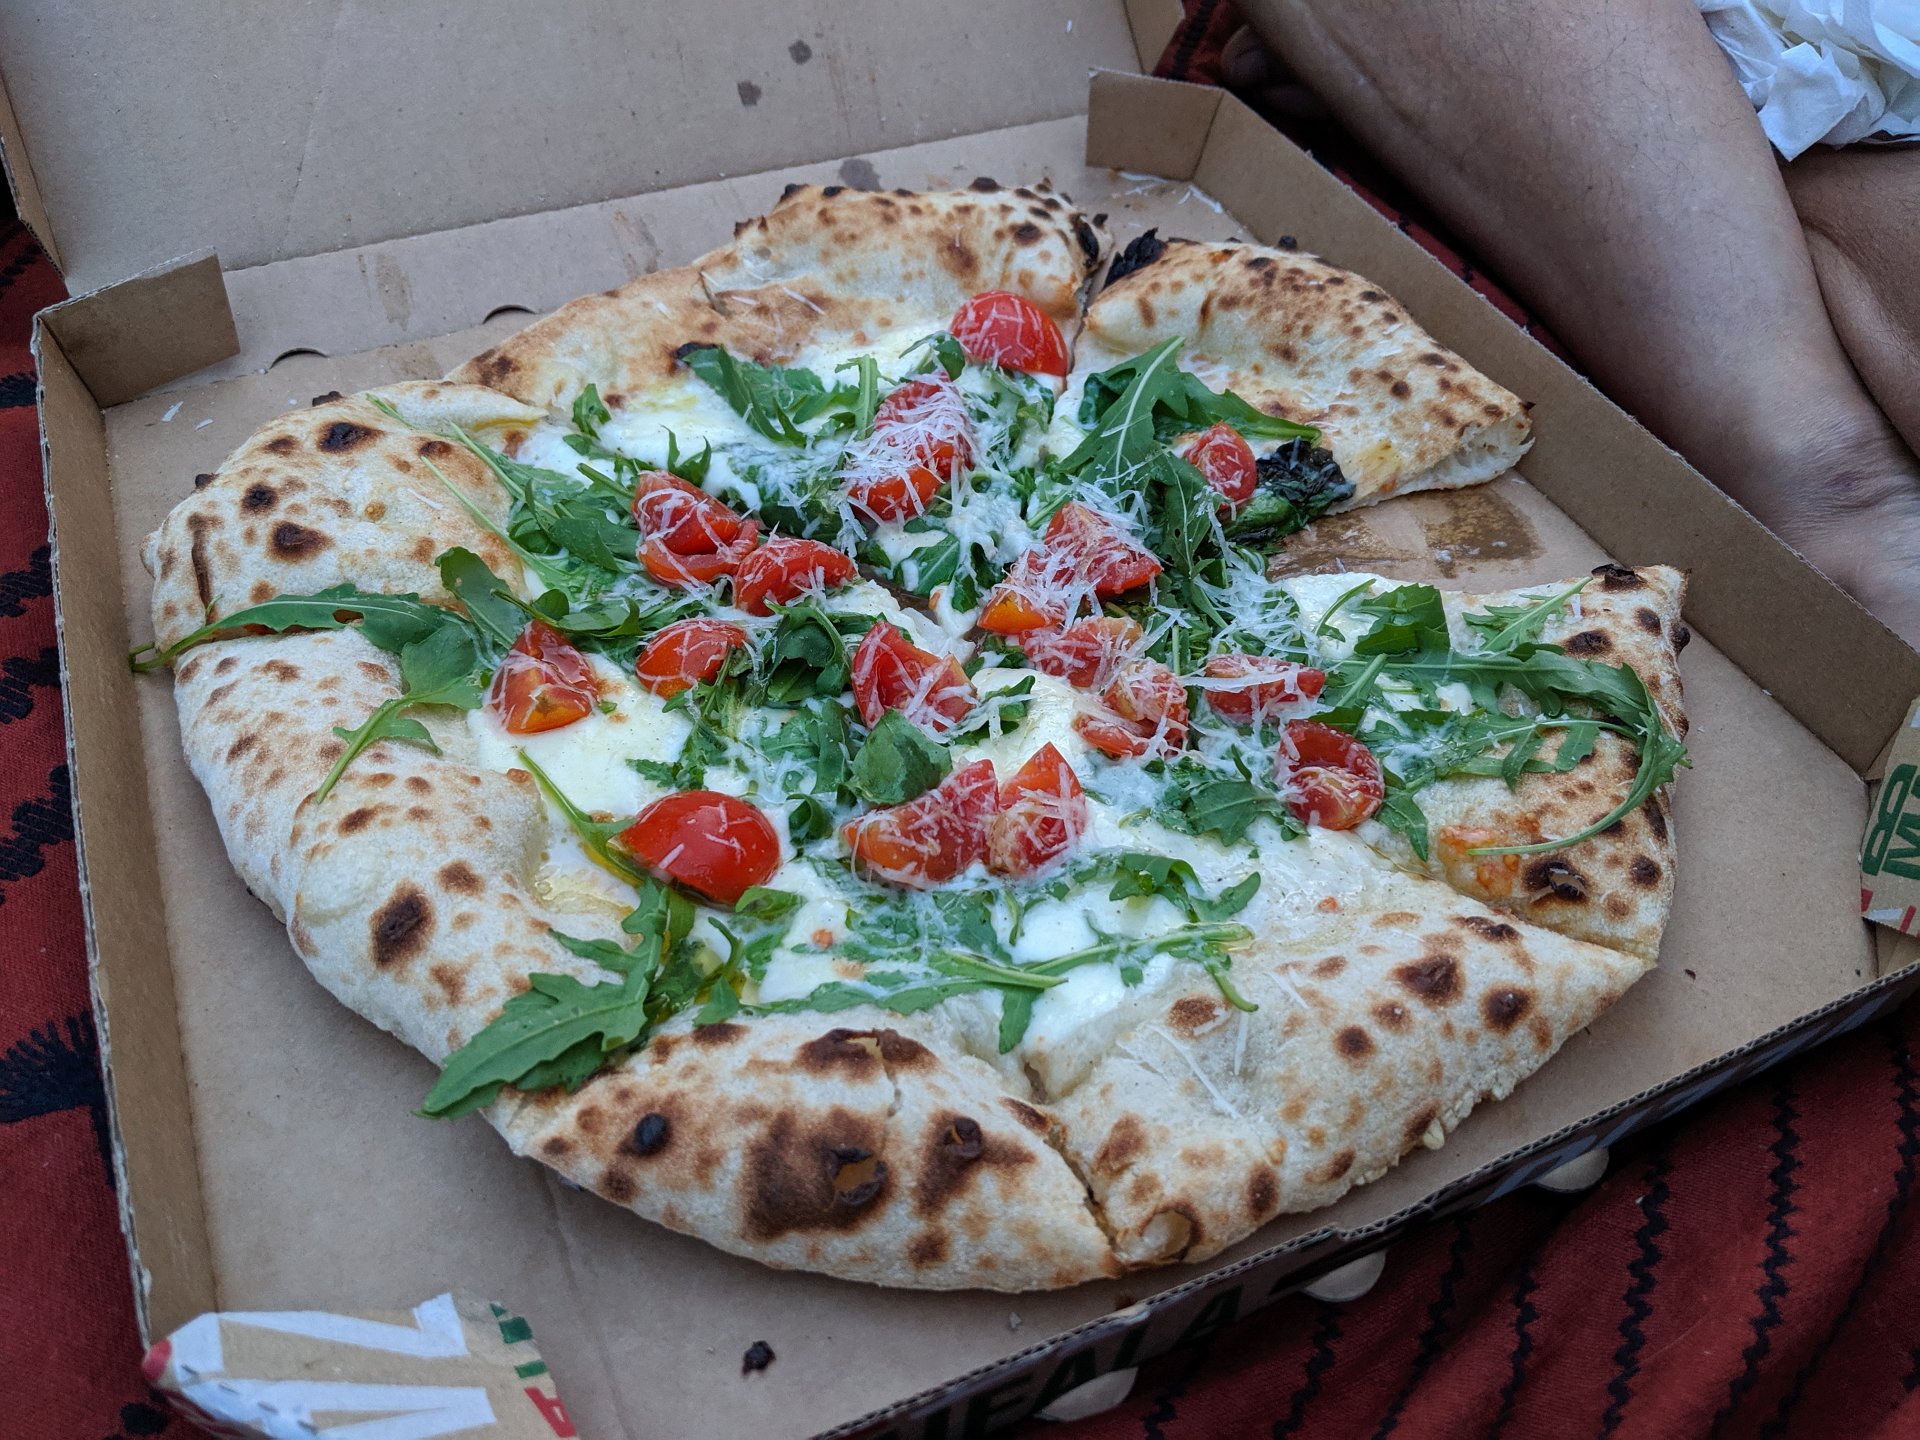 The pizza with buffalo mozzarella, rucola, and tomatoes